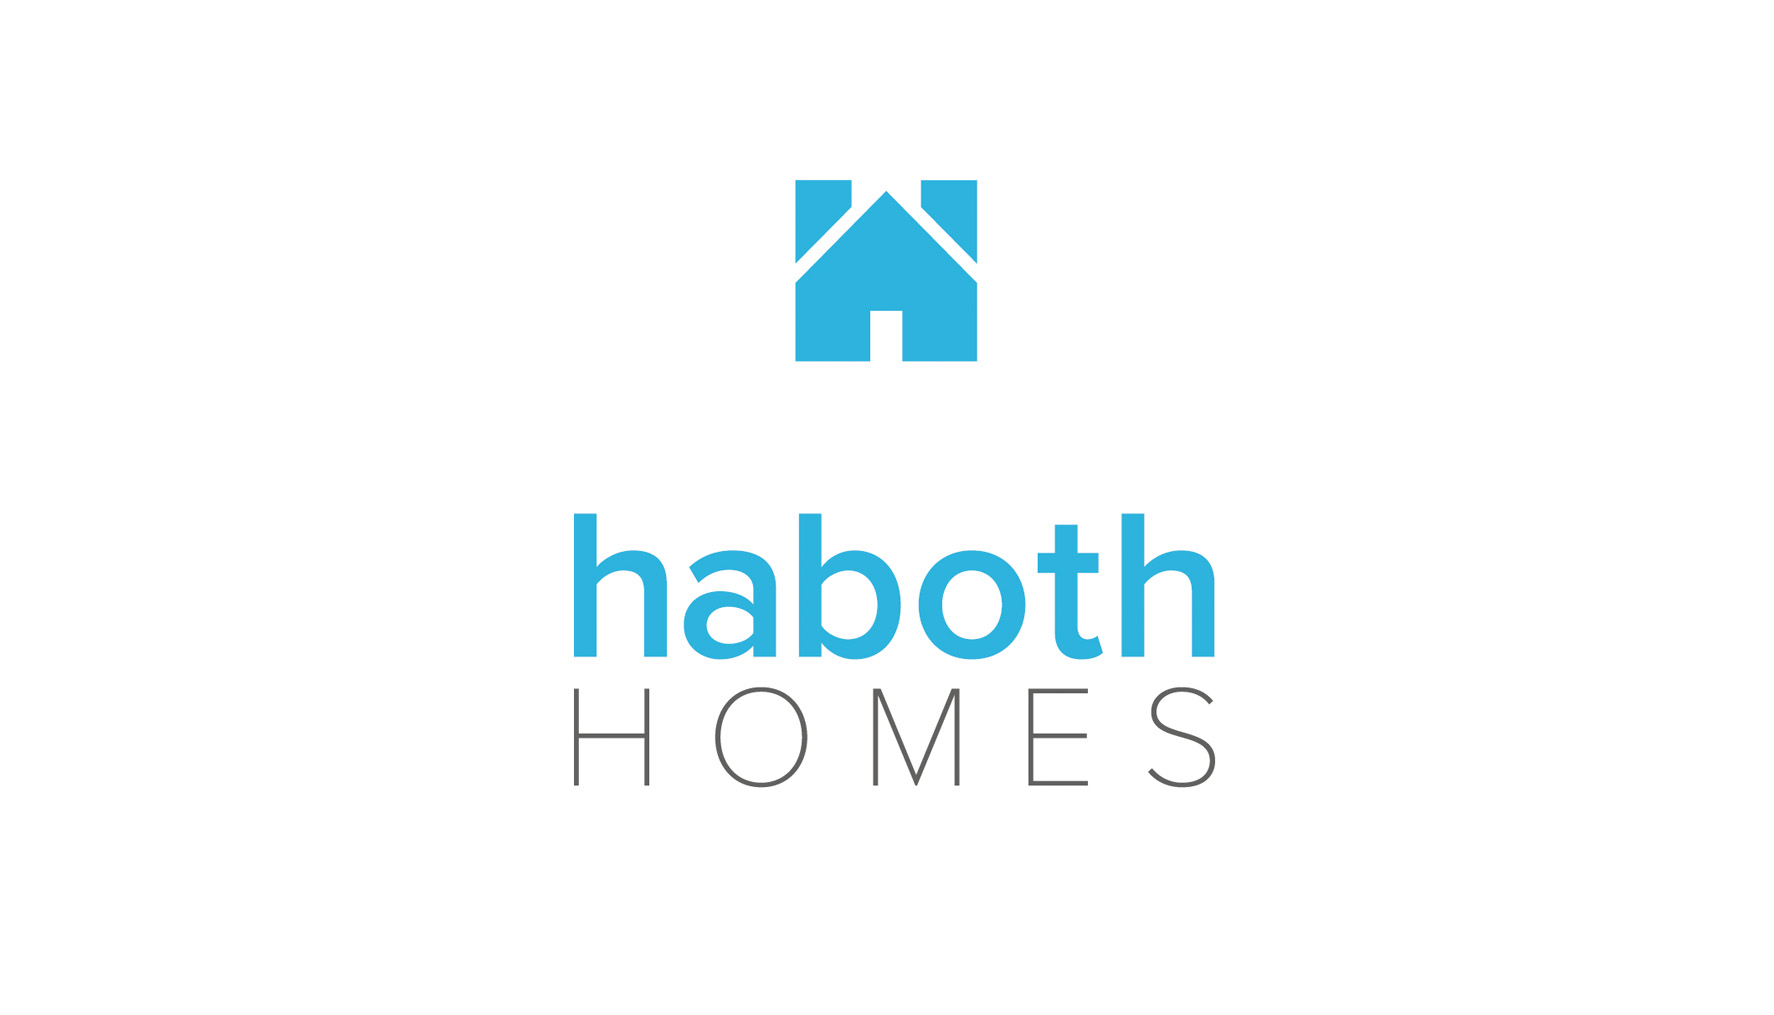 Haboth Homes